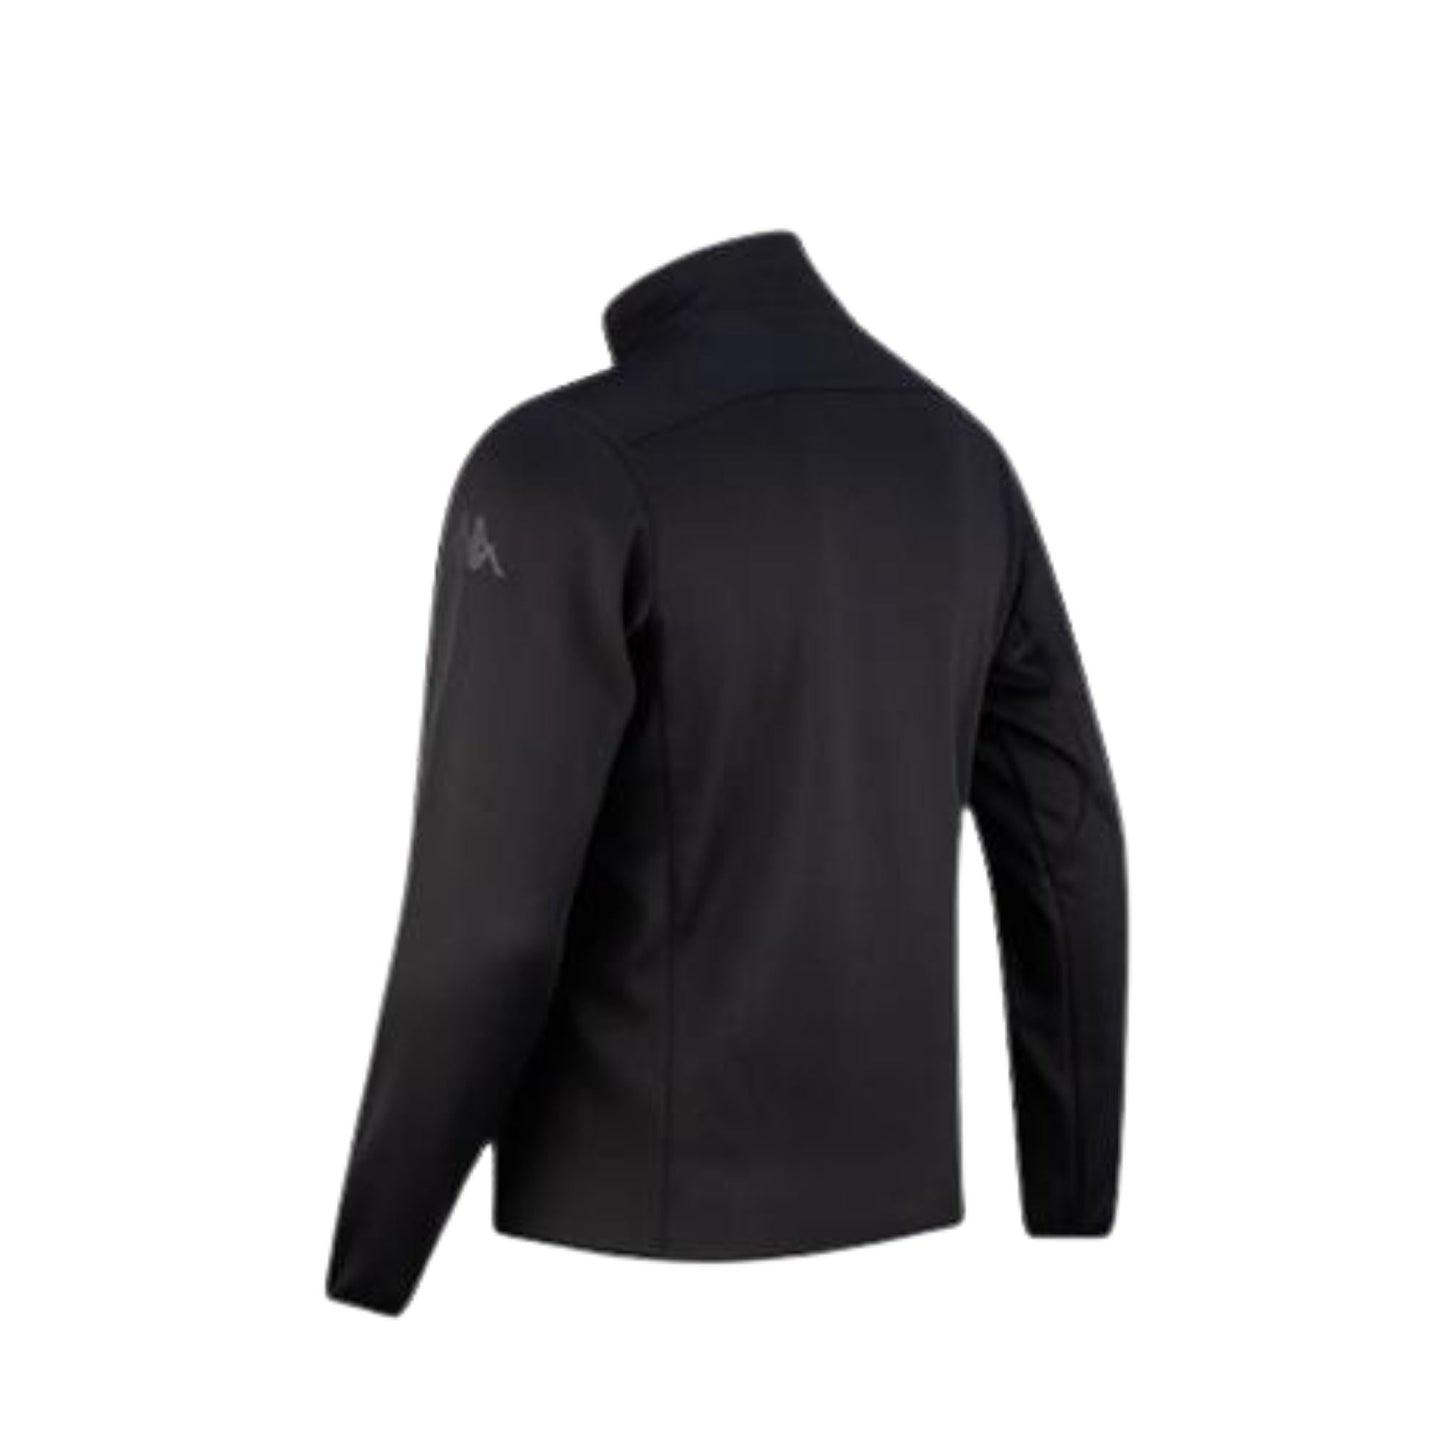 Kappa Tech Jacket Waterproof Coats & Jackets KAPPA 